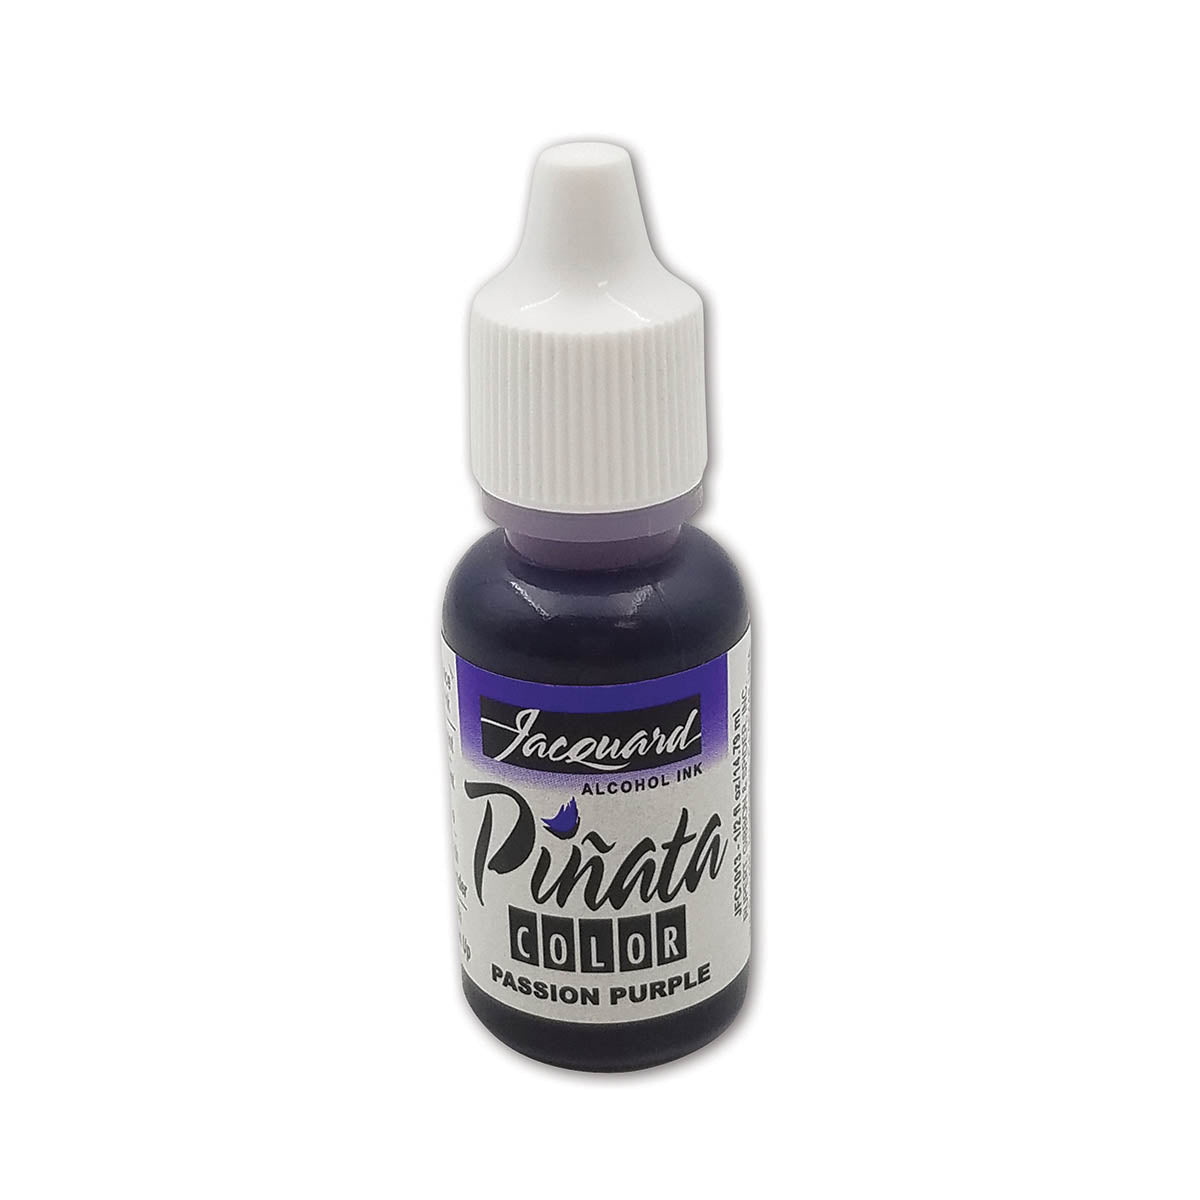 Jacquard - Pinata Alcohol Inks 1-2oz 15ml - Passion Purple 013